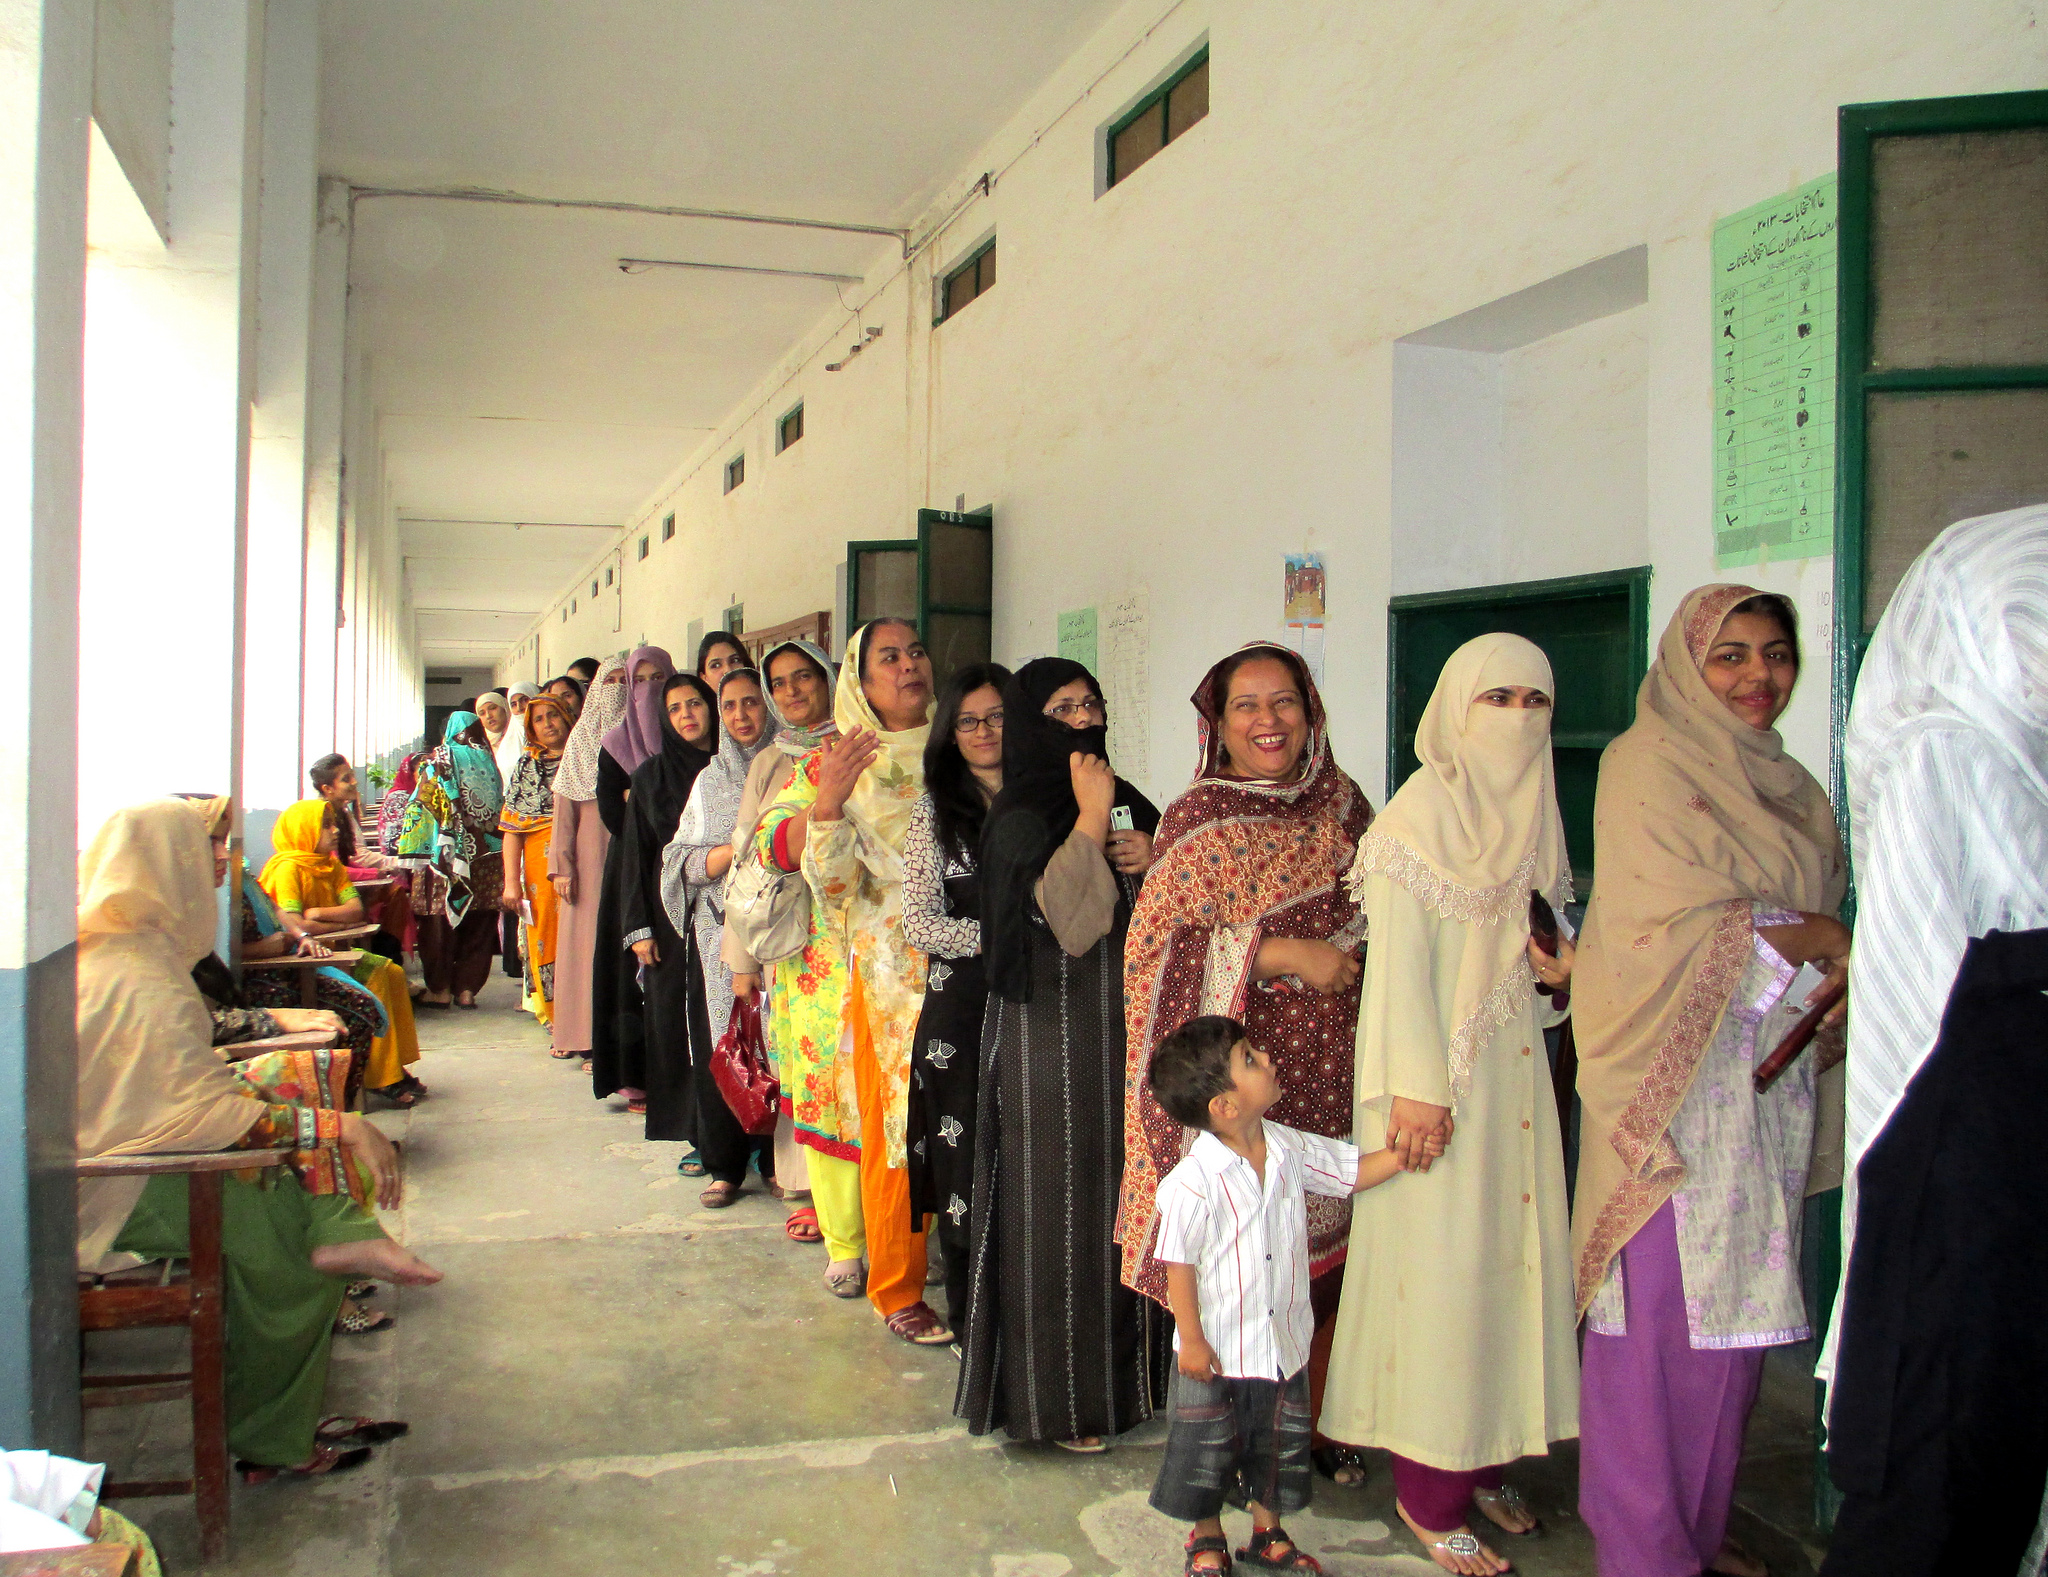 ECP urges parties to ensure 5pc representation of women - Pakistan